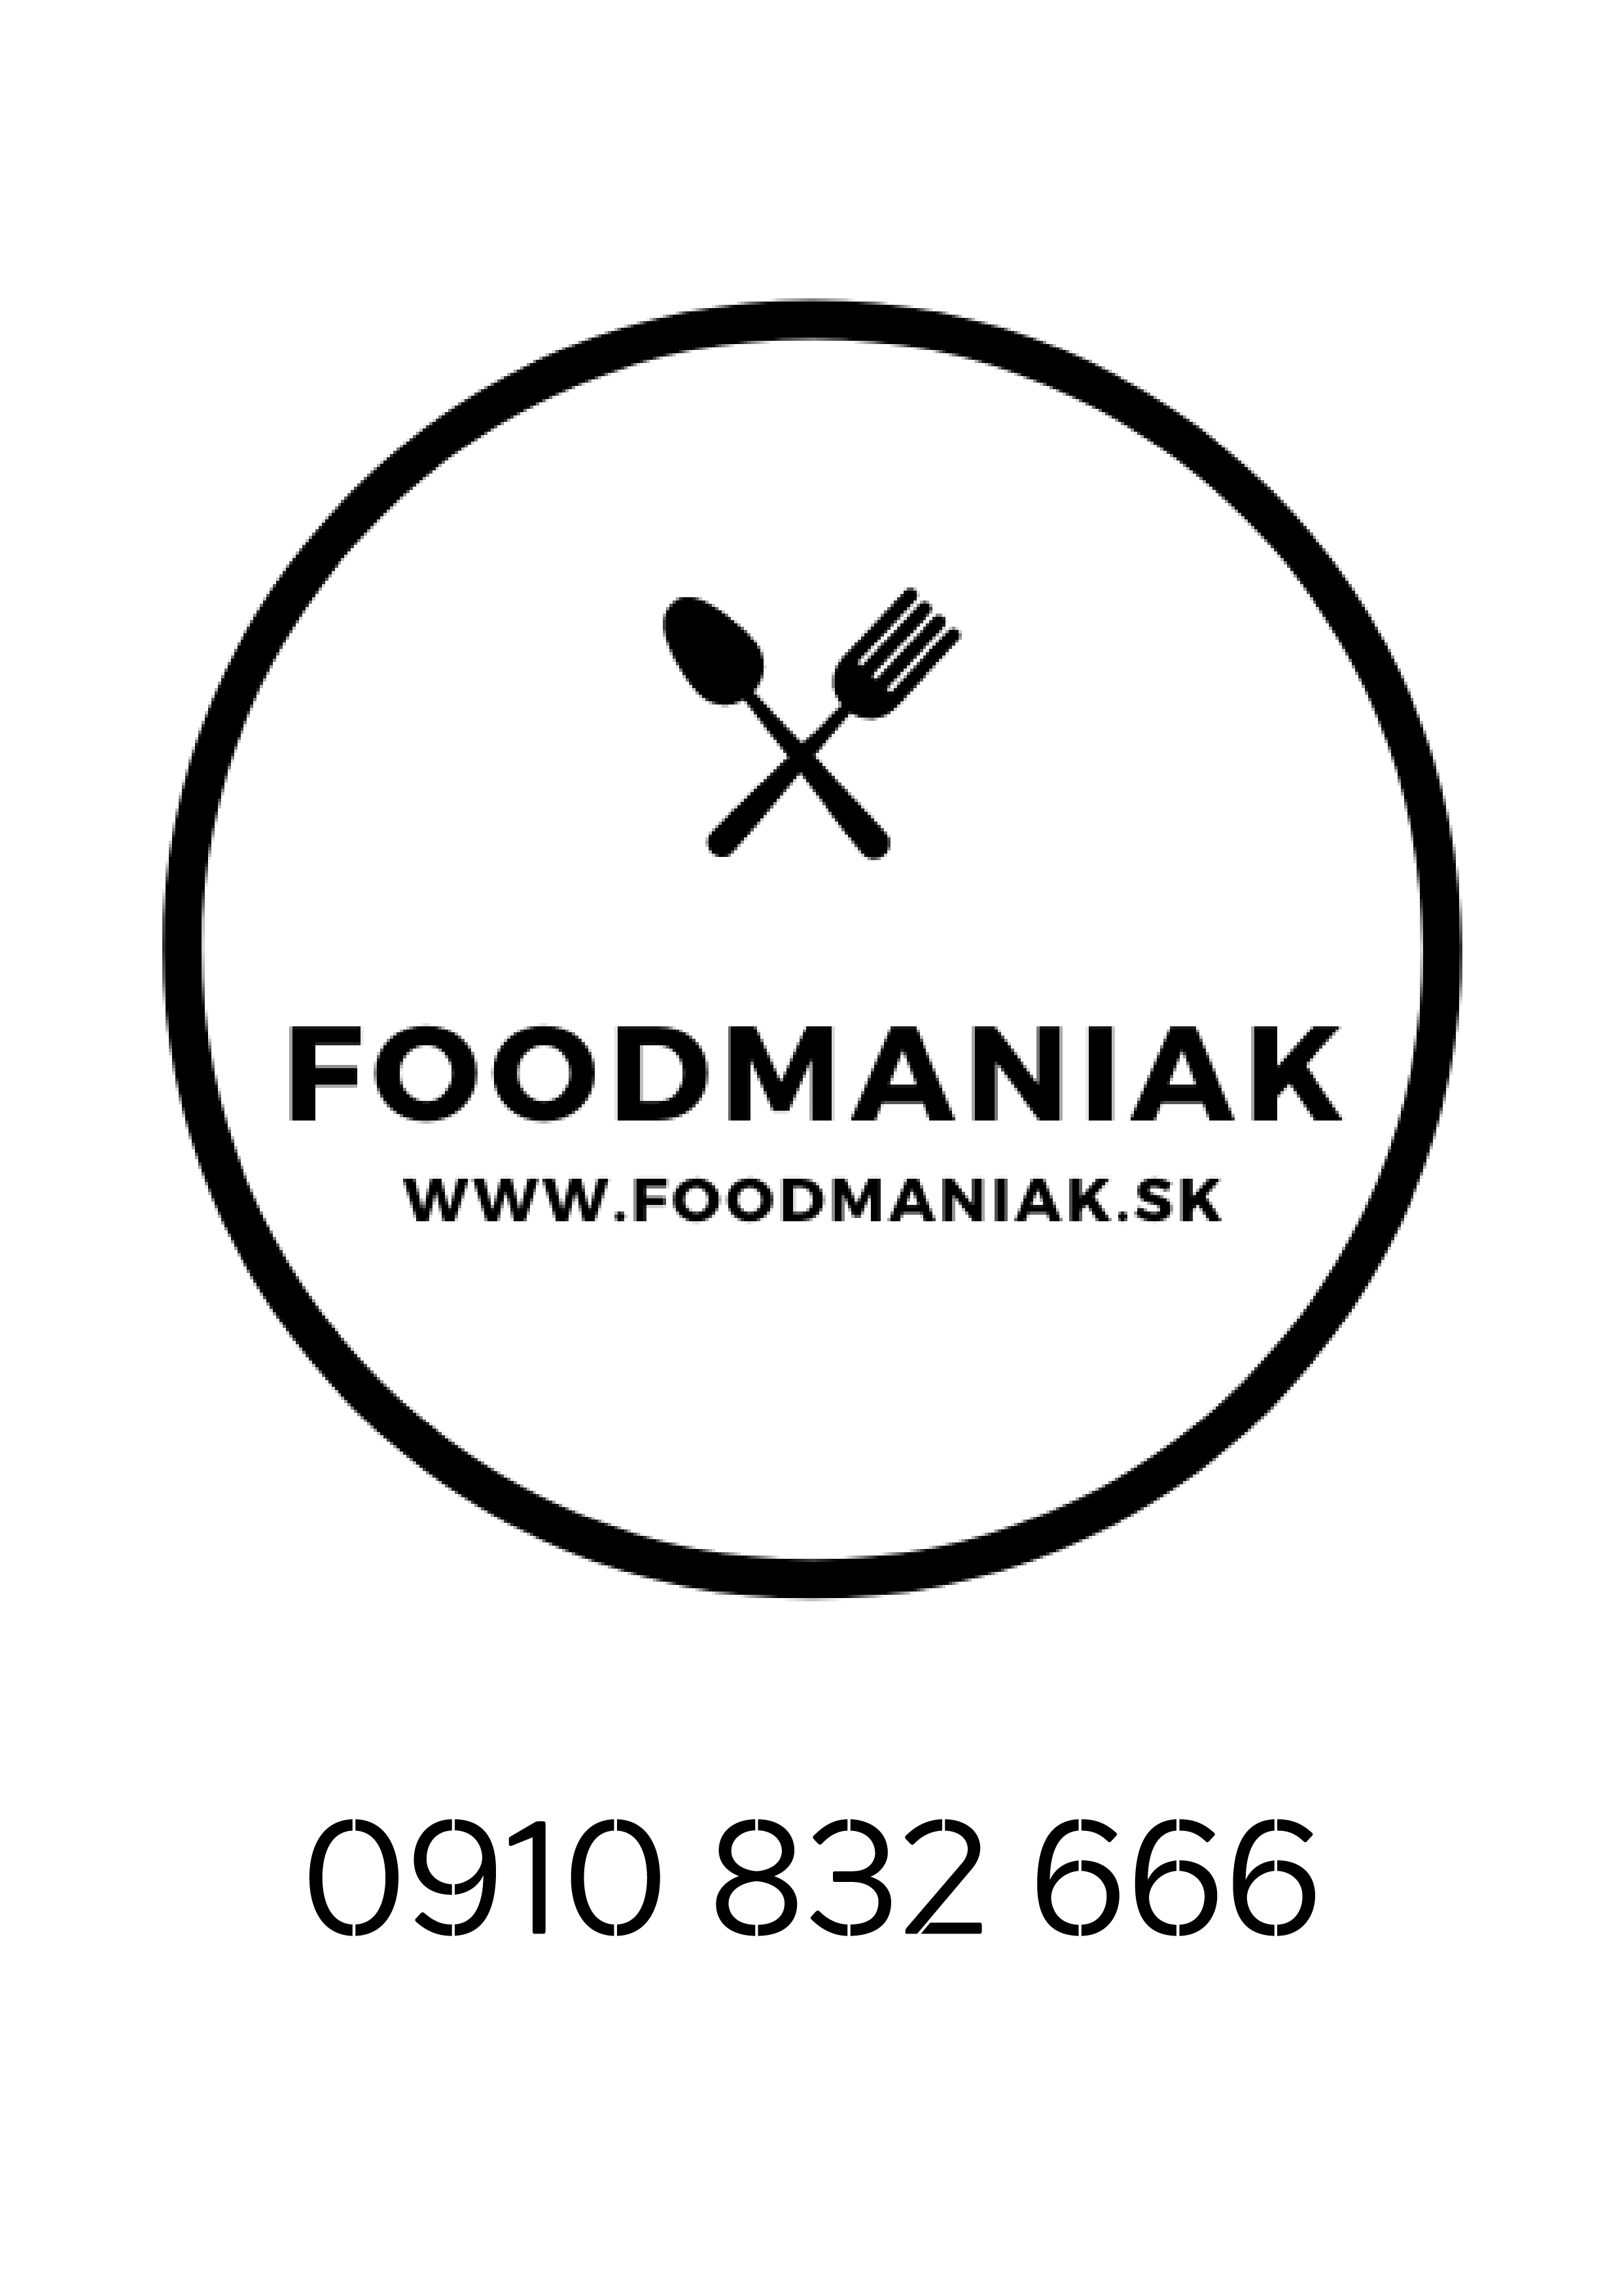 Foodmaniak